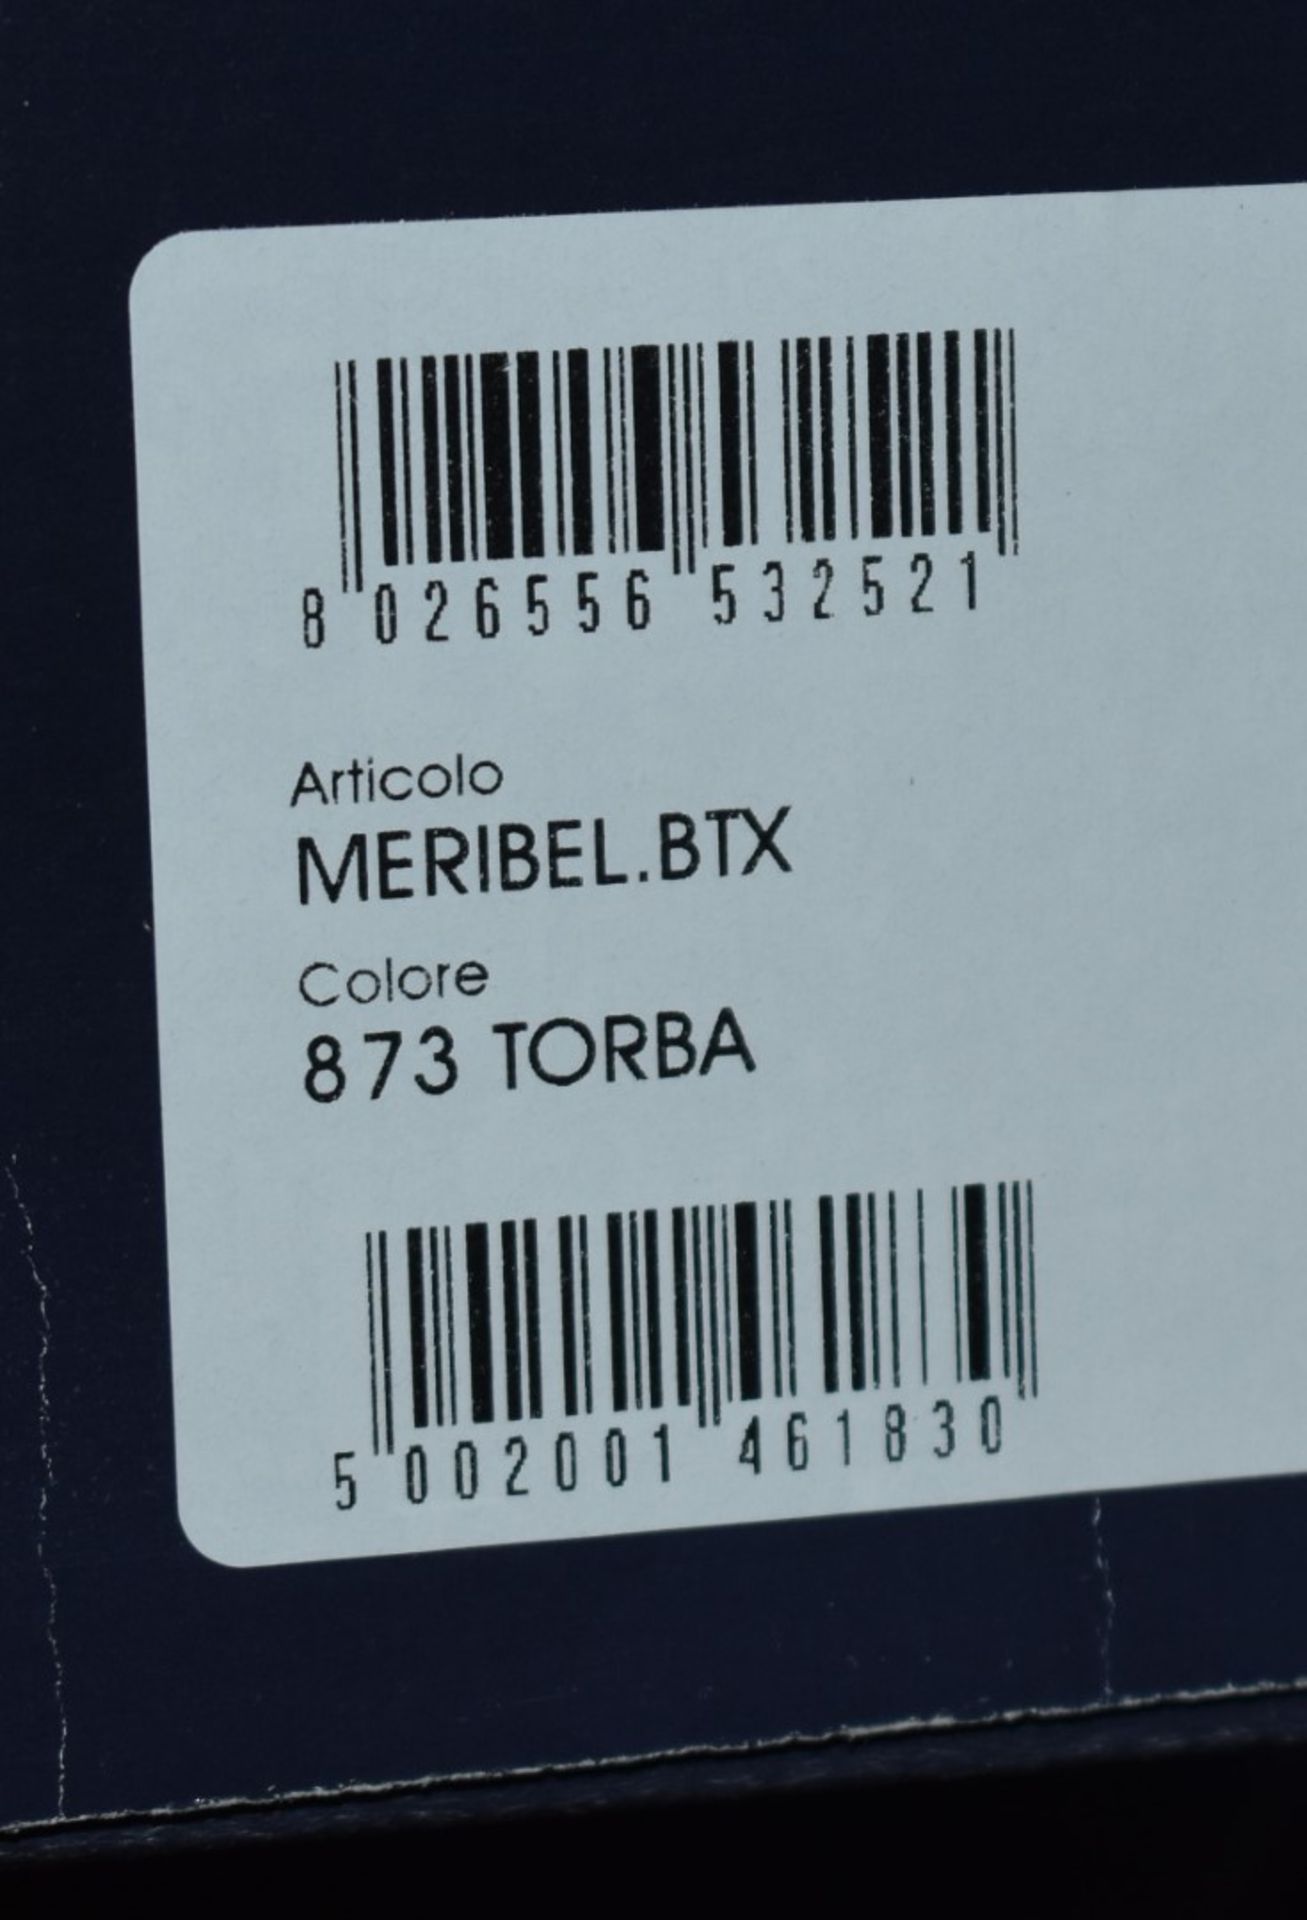 1 x Pair of Designer Olang Meribel 873 Torba Women's Winter Boots - Euro Size 37 - Brand New Boxed - Image 3 of 5